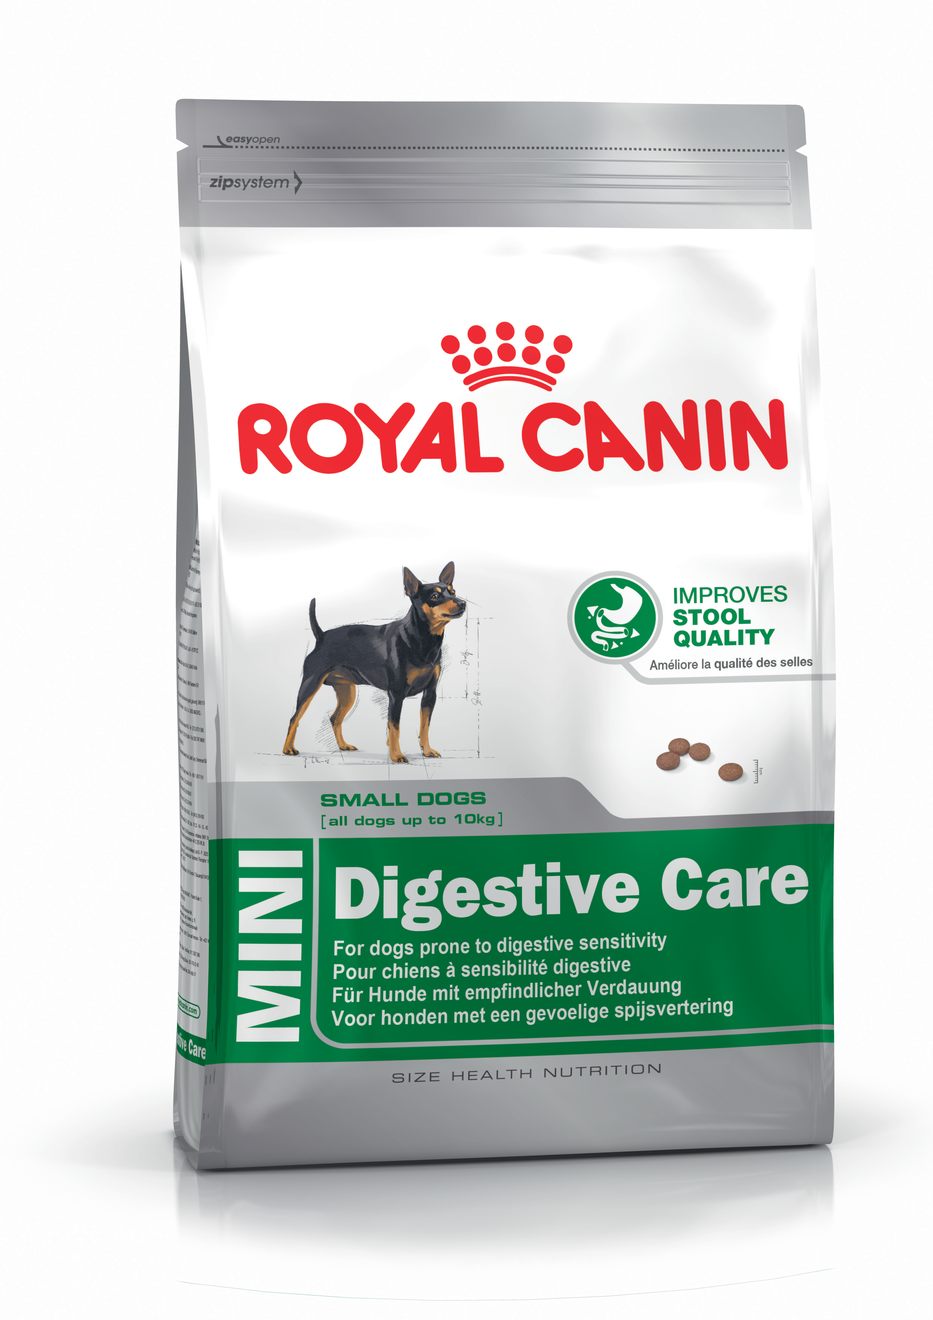 mini digestive care royal canin